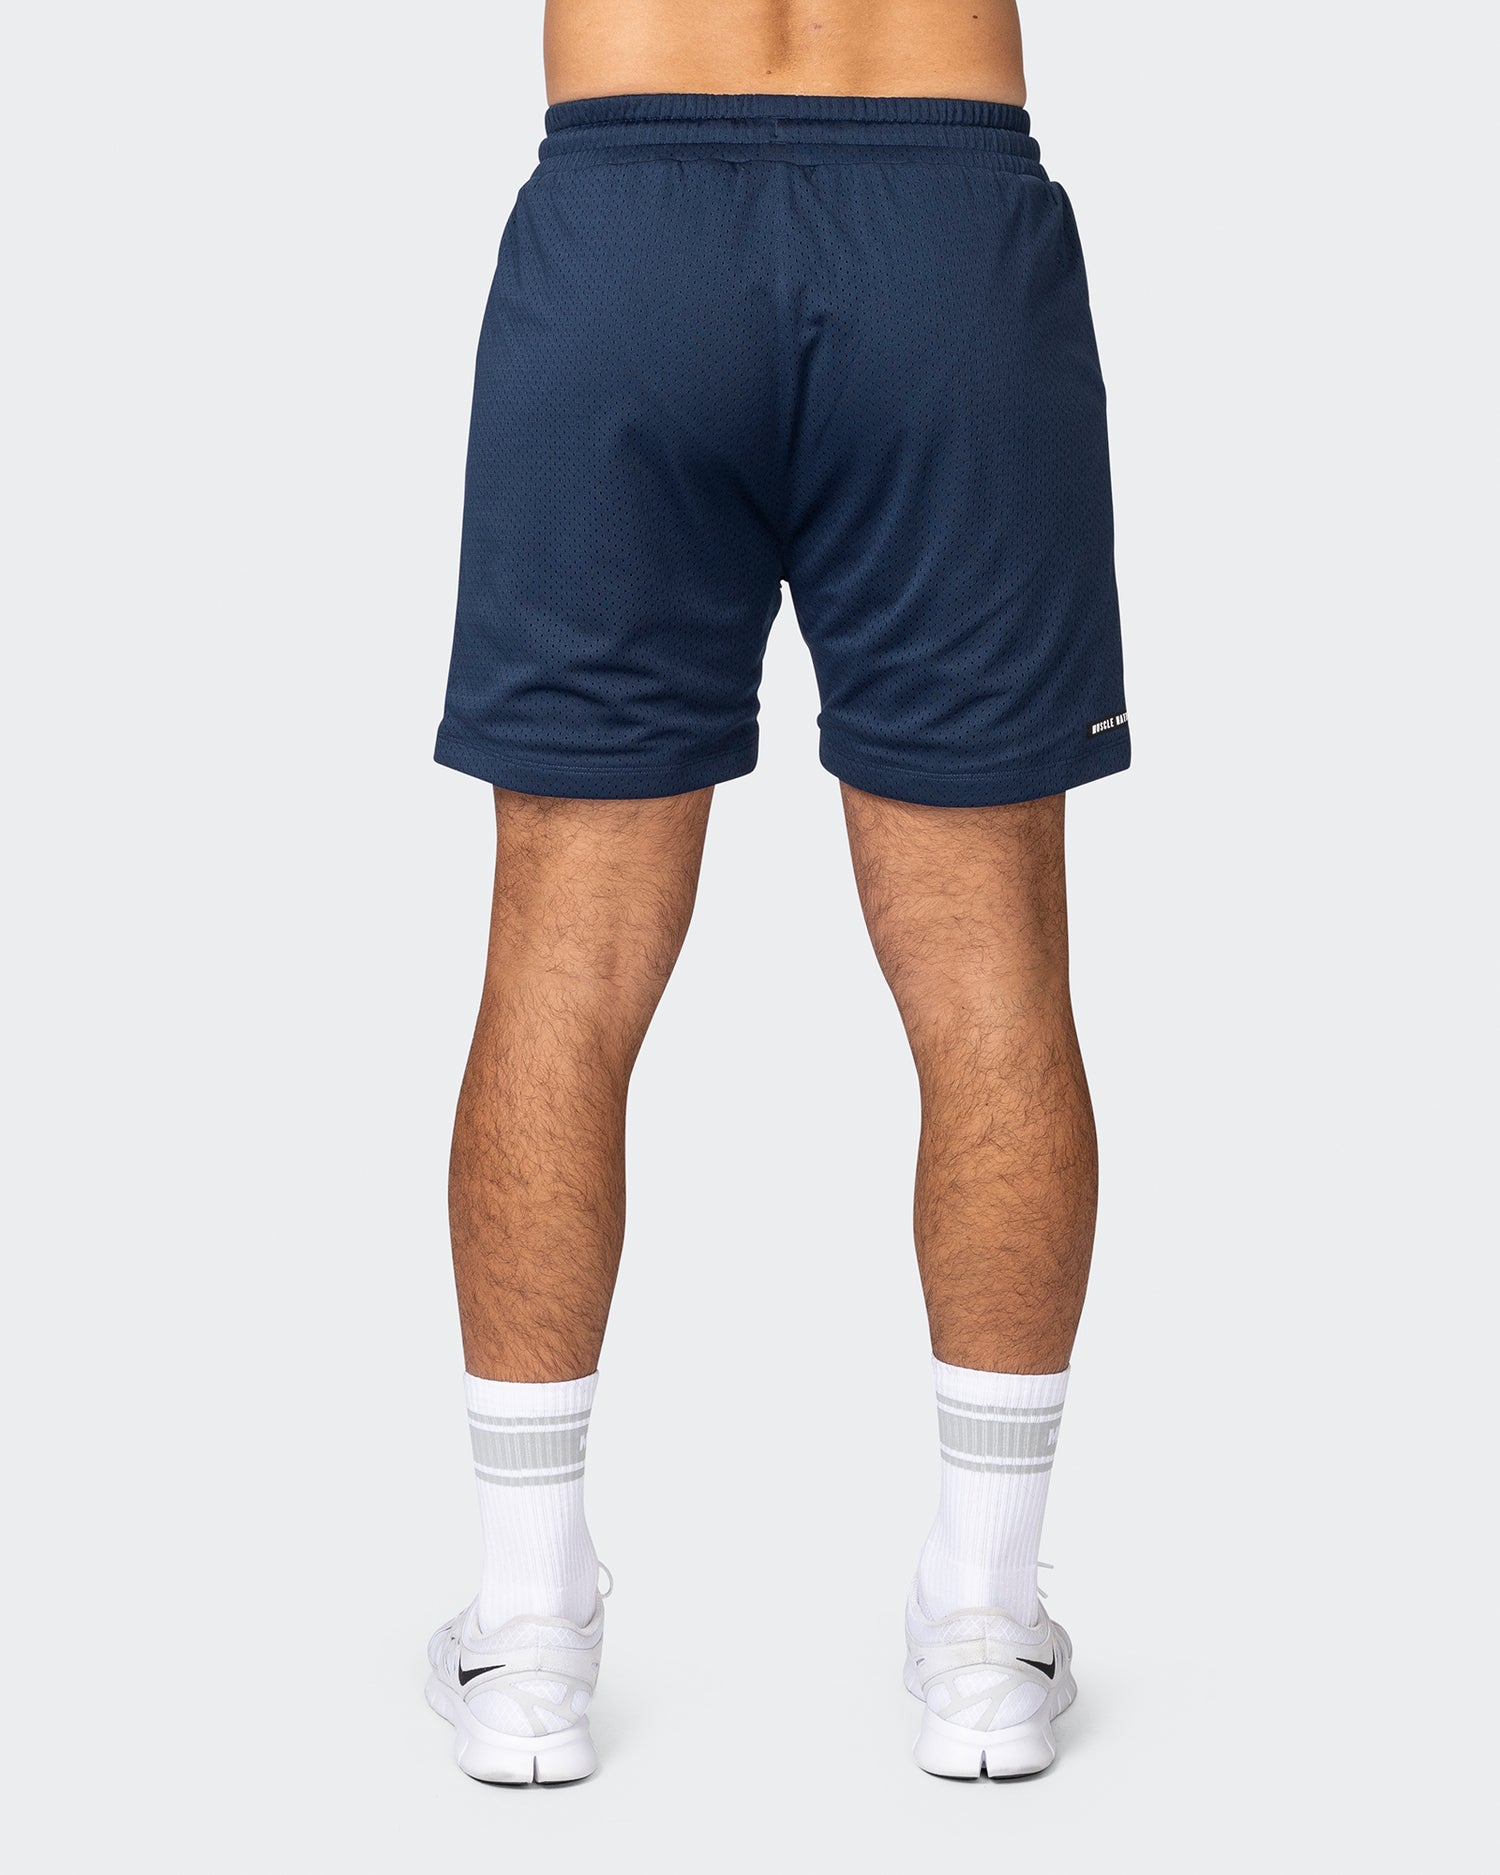 Lay Up 5" Shorts - Navy